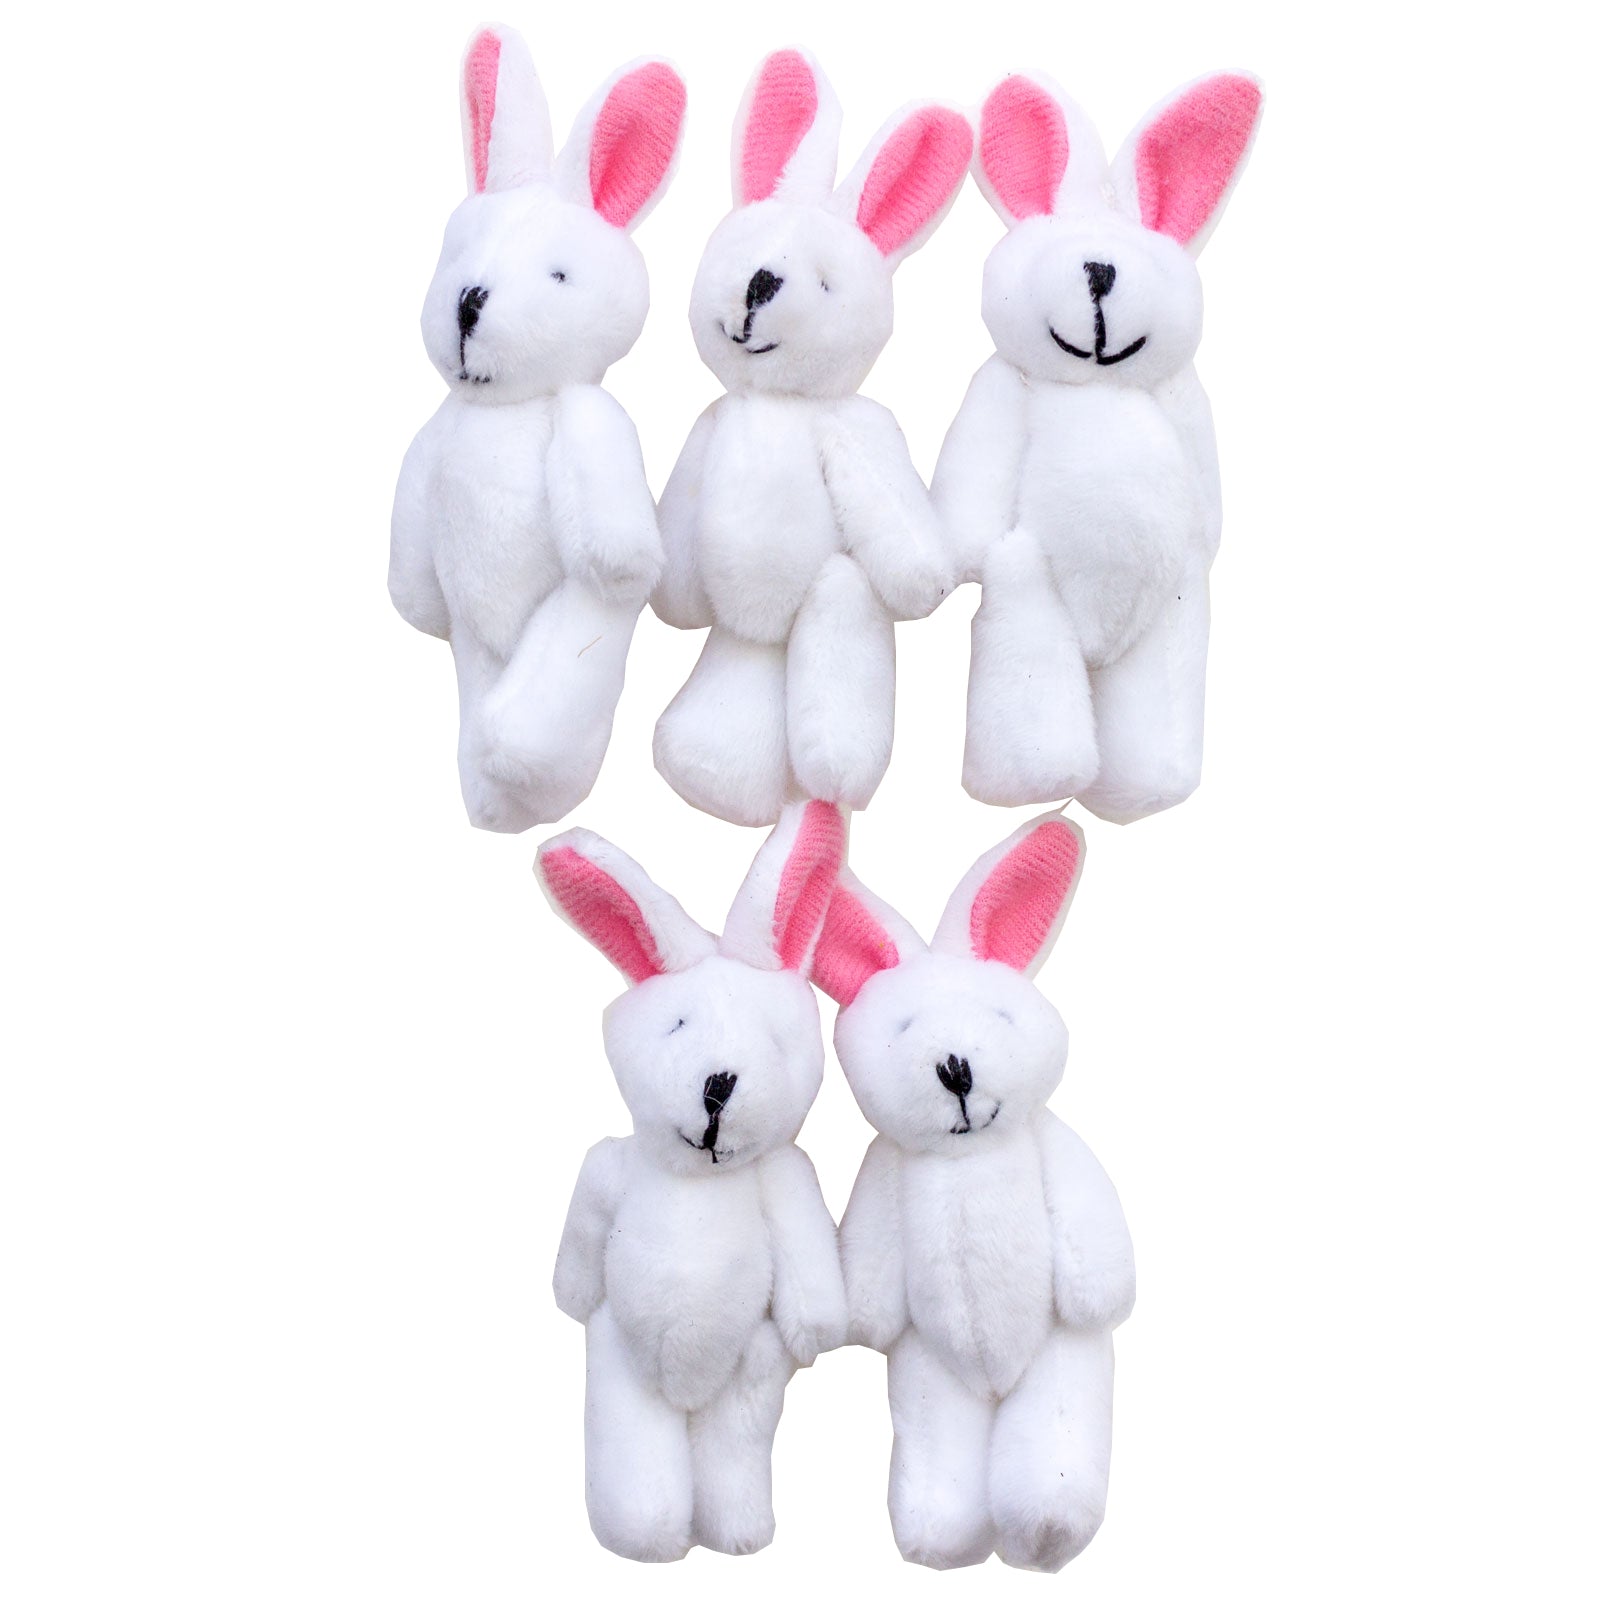 Small Rabbits X 45 - Cute Soft Adorable